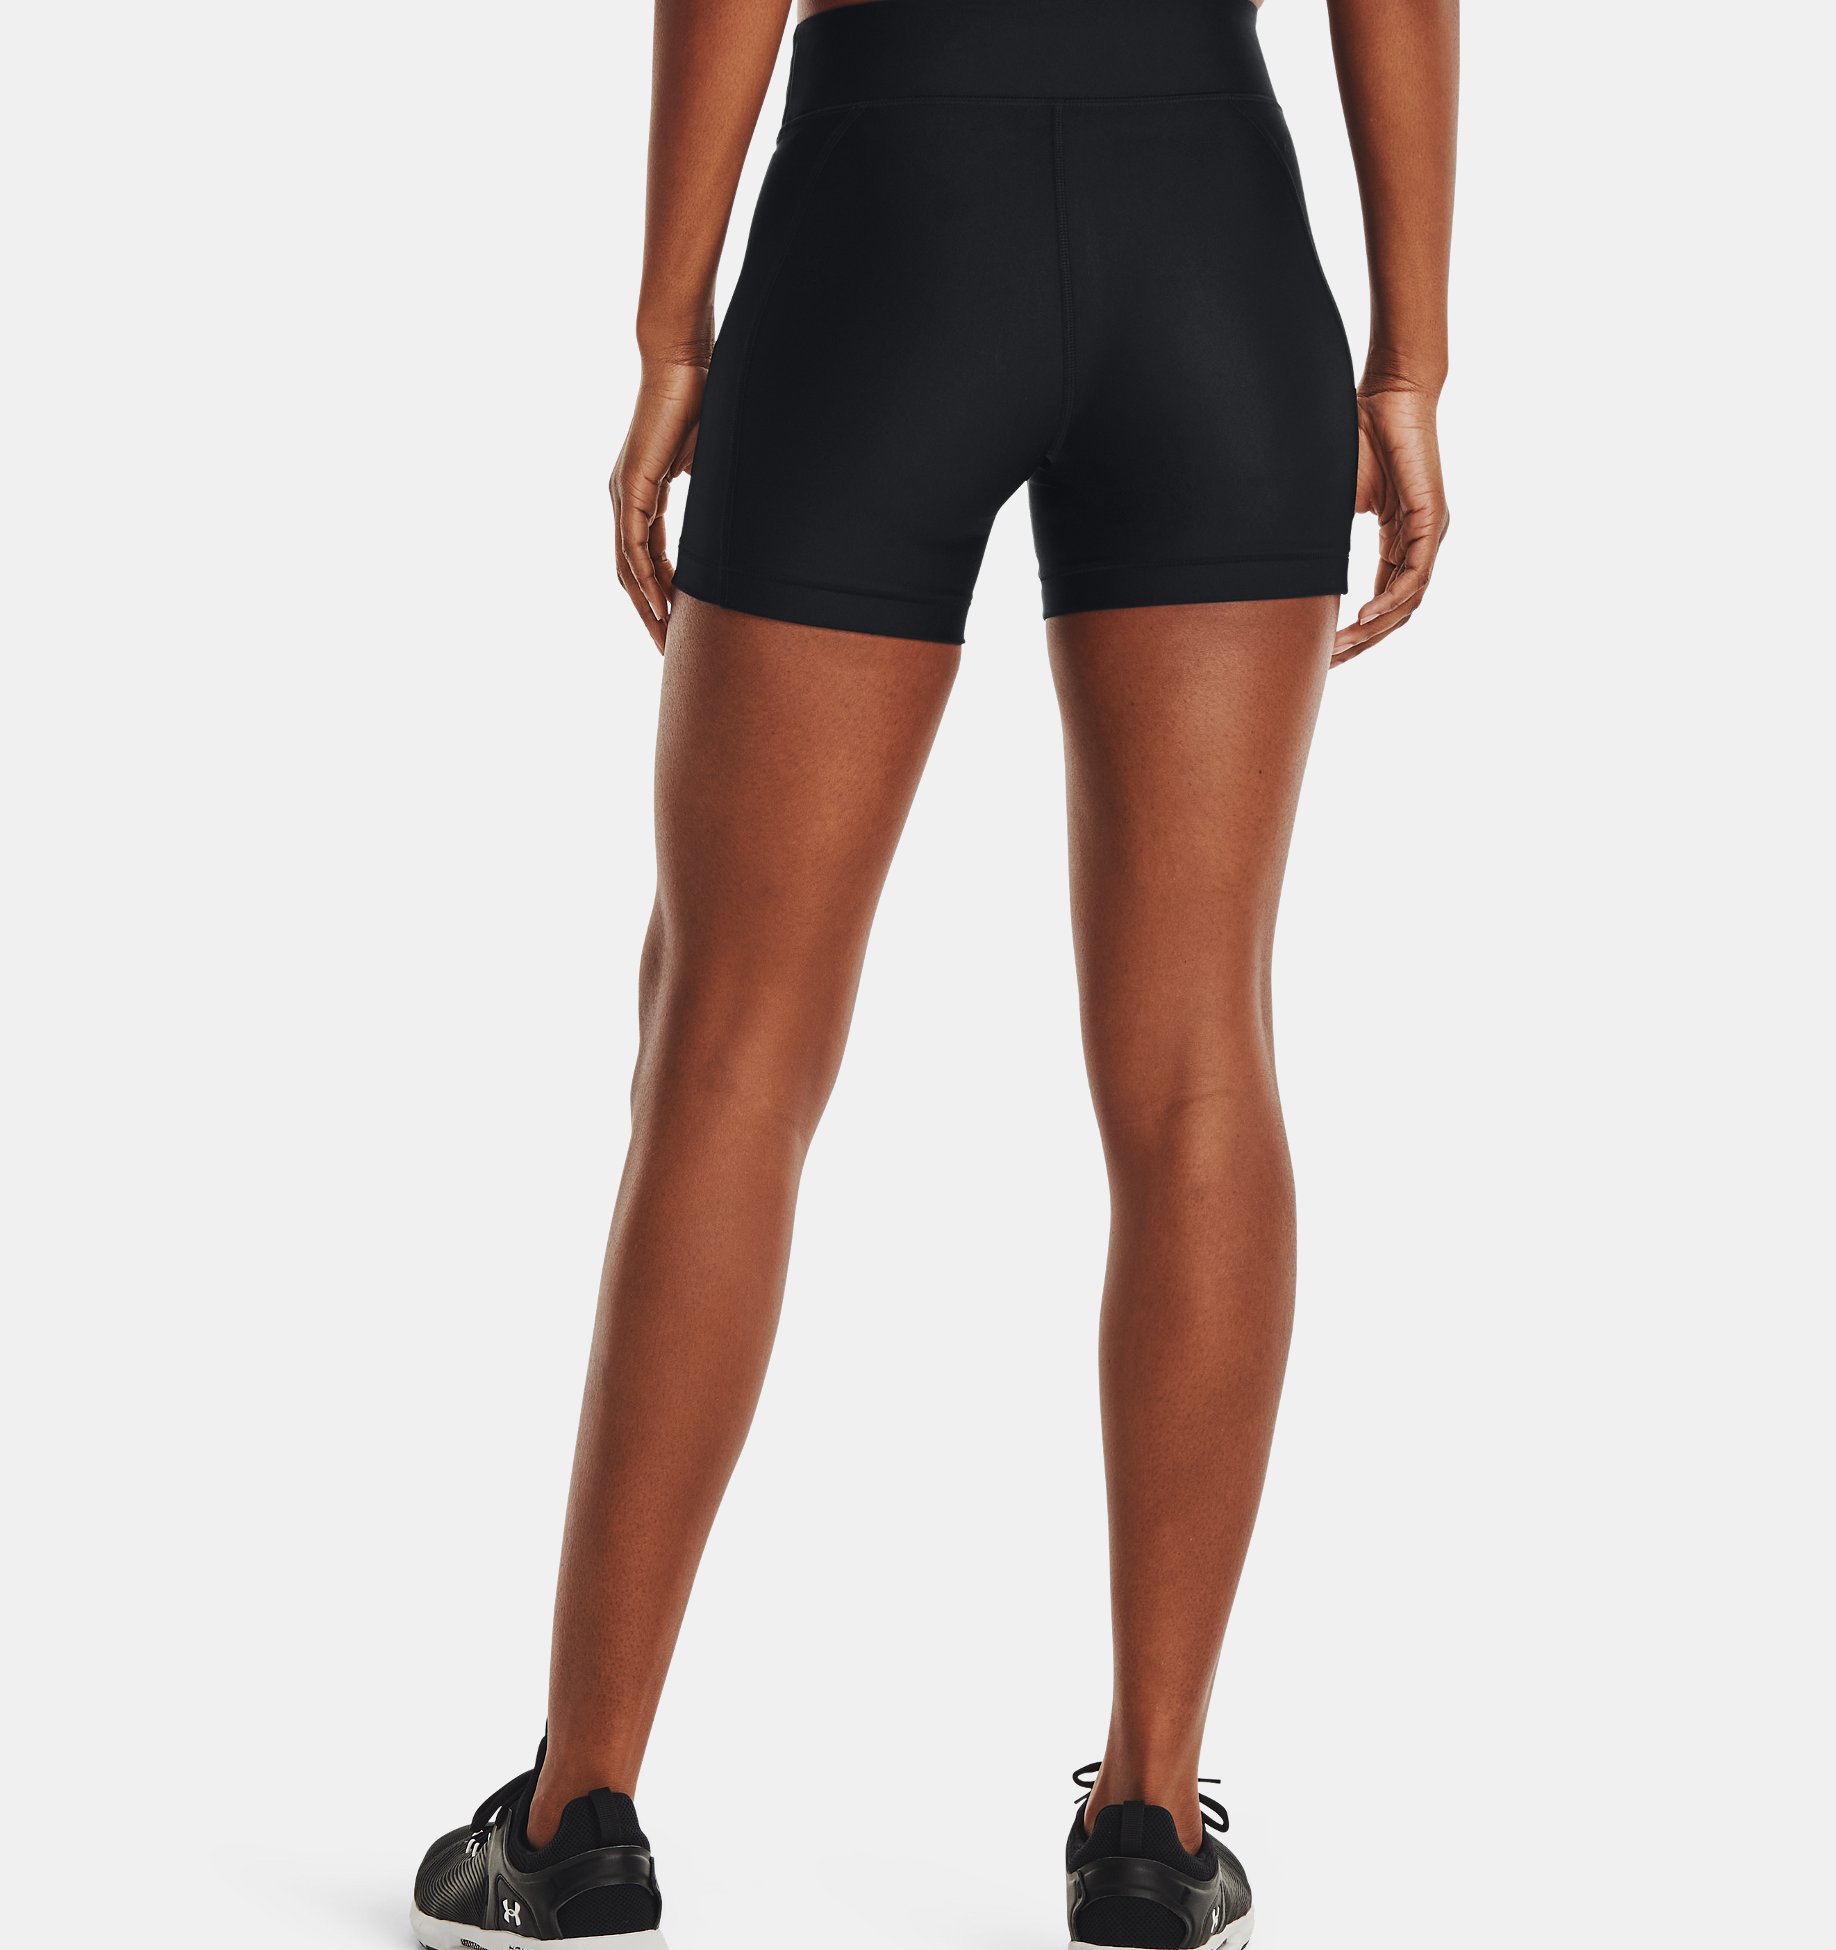 Under Armour Womans Heatgear Shorts 2.0 black/white 